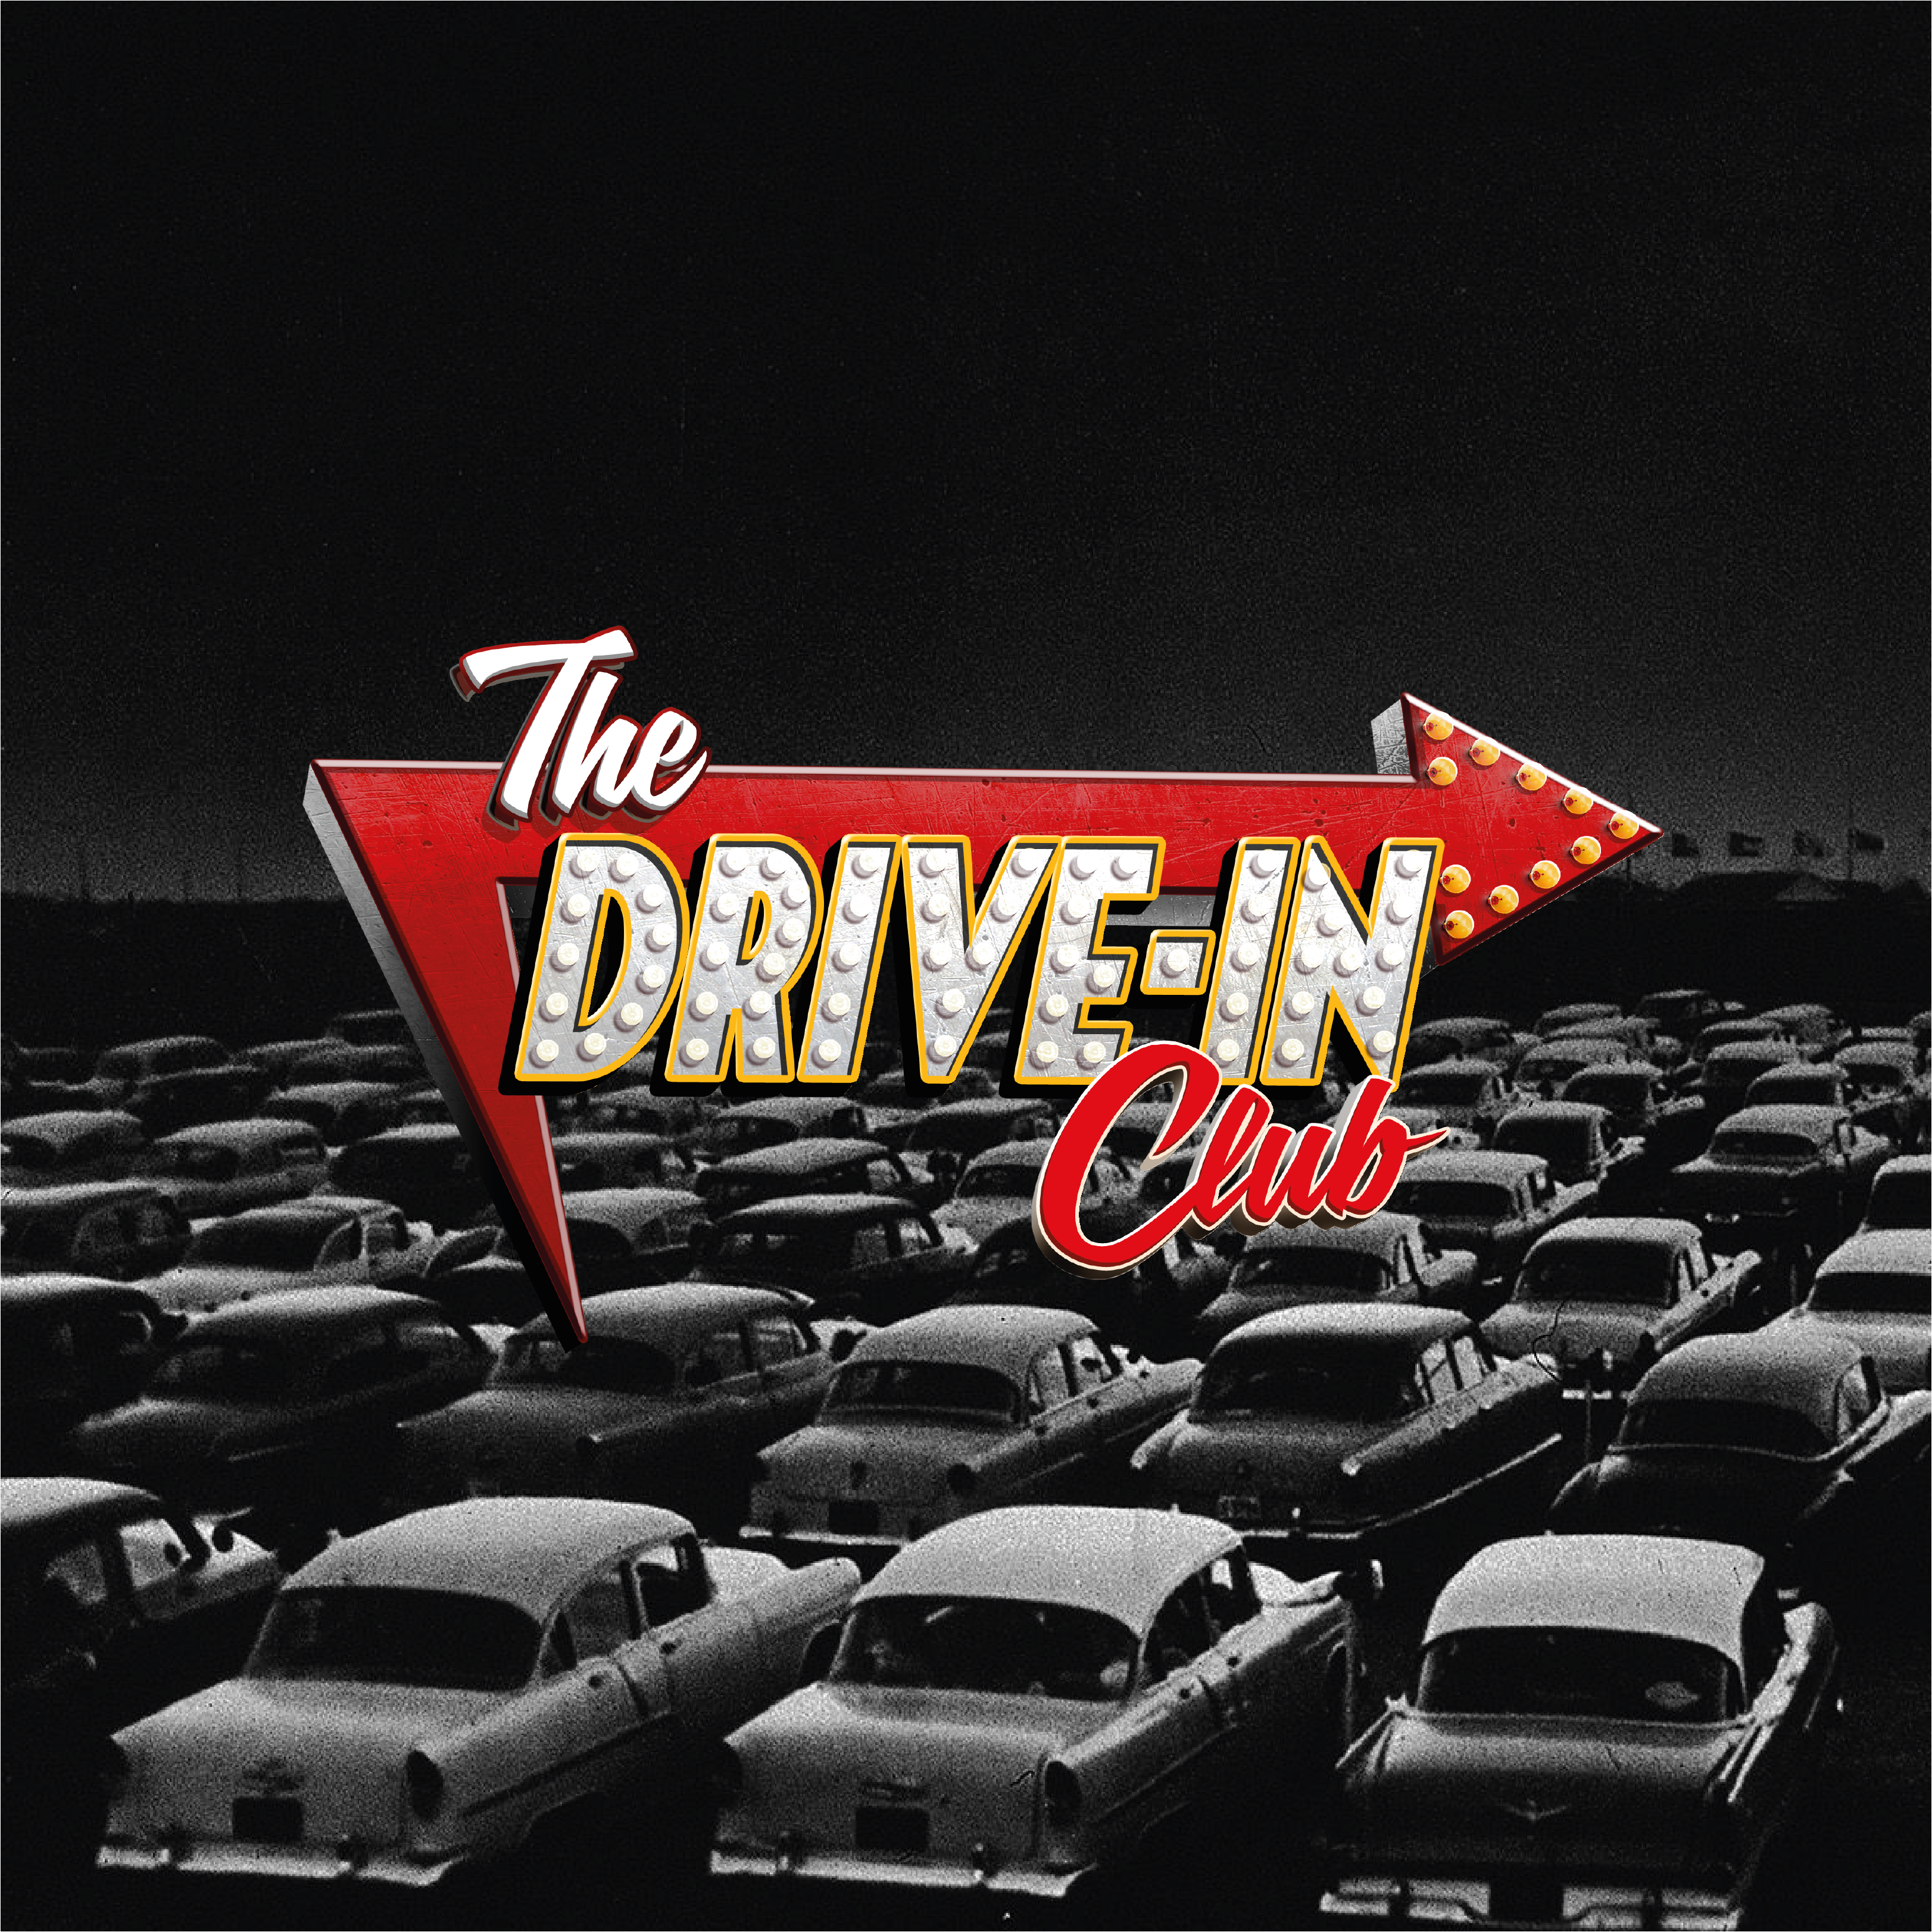 The Drive-In Club logo